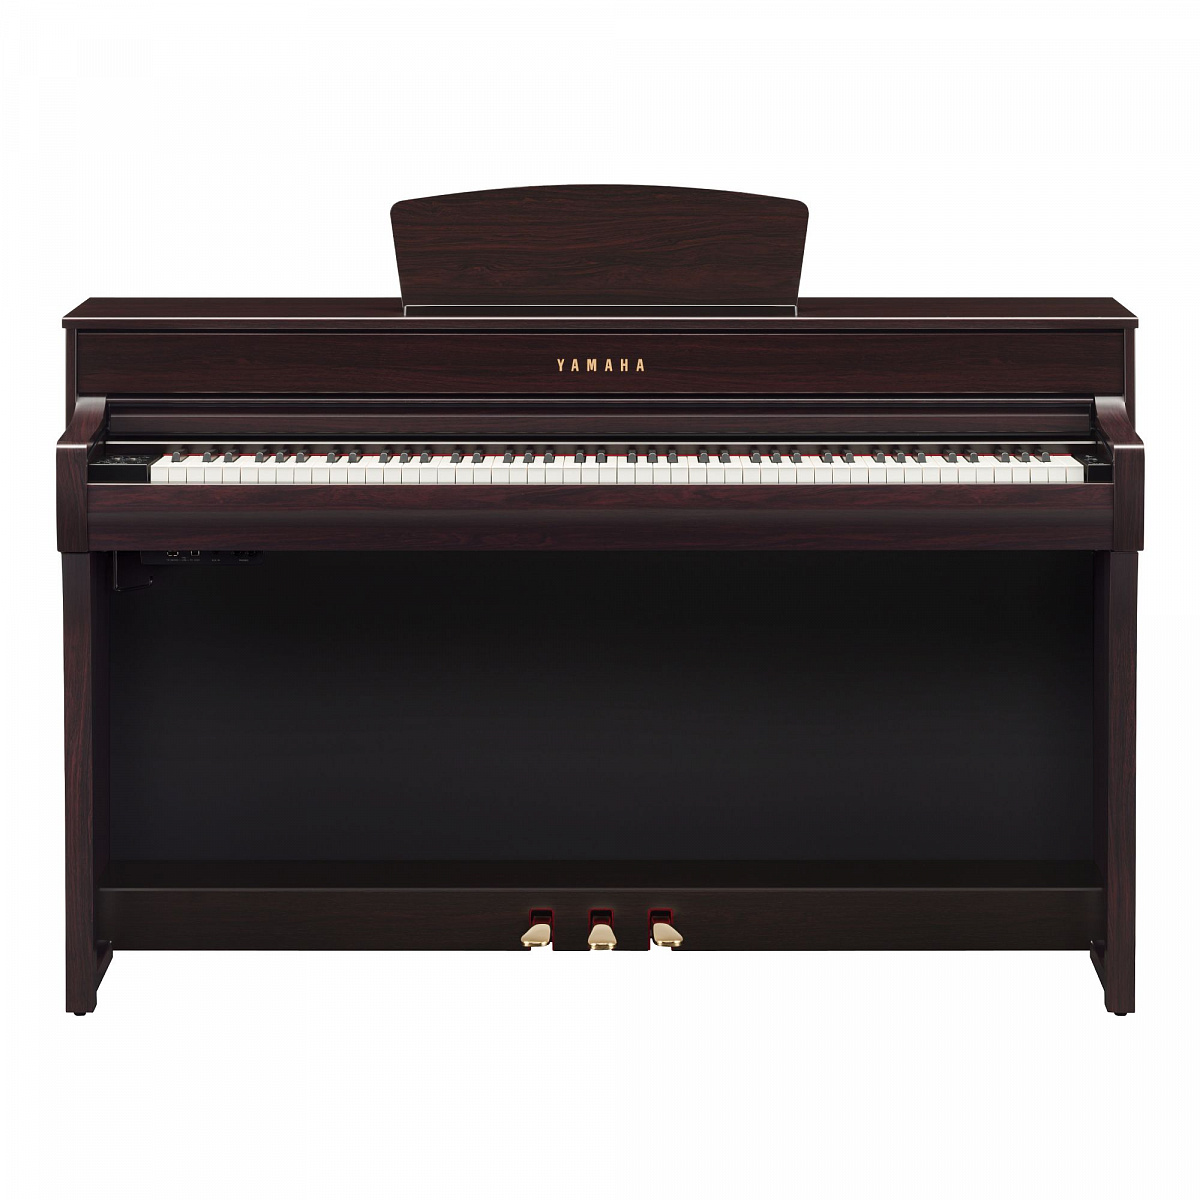 Yamaha CLP-735R цифровое пианино серии Clavinova